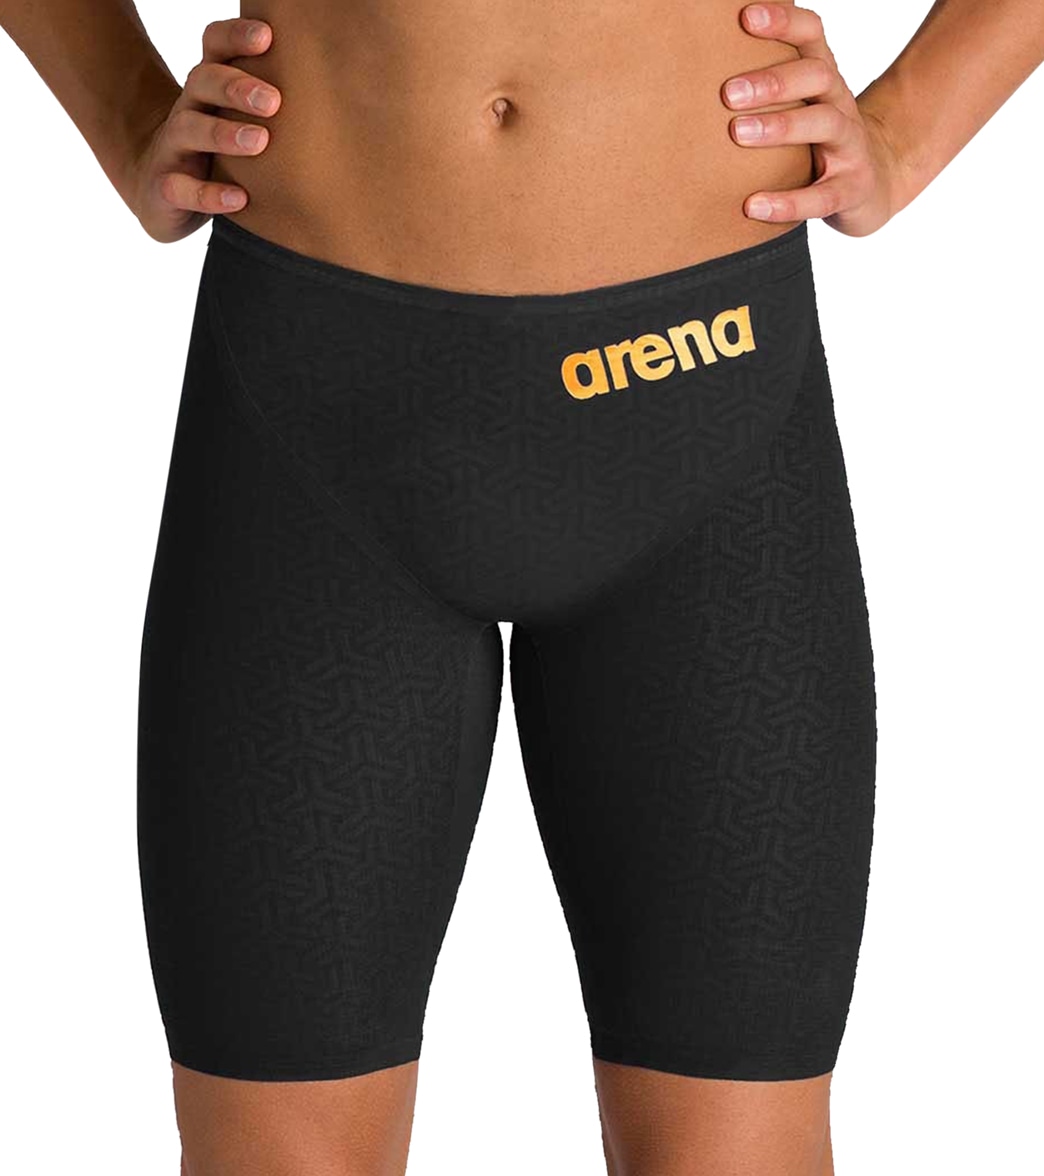 Arena Men's Powerskin Carbon Glide Jammer Tech Swimsuit - Black/Gold 22 Elastane/Polyamide - Swimoutlet.com